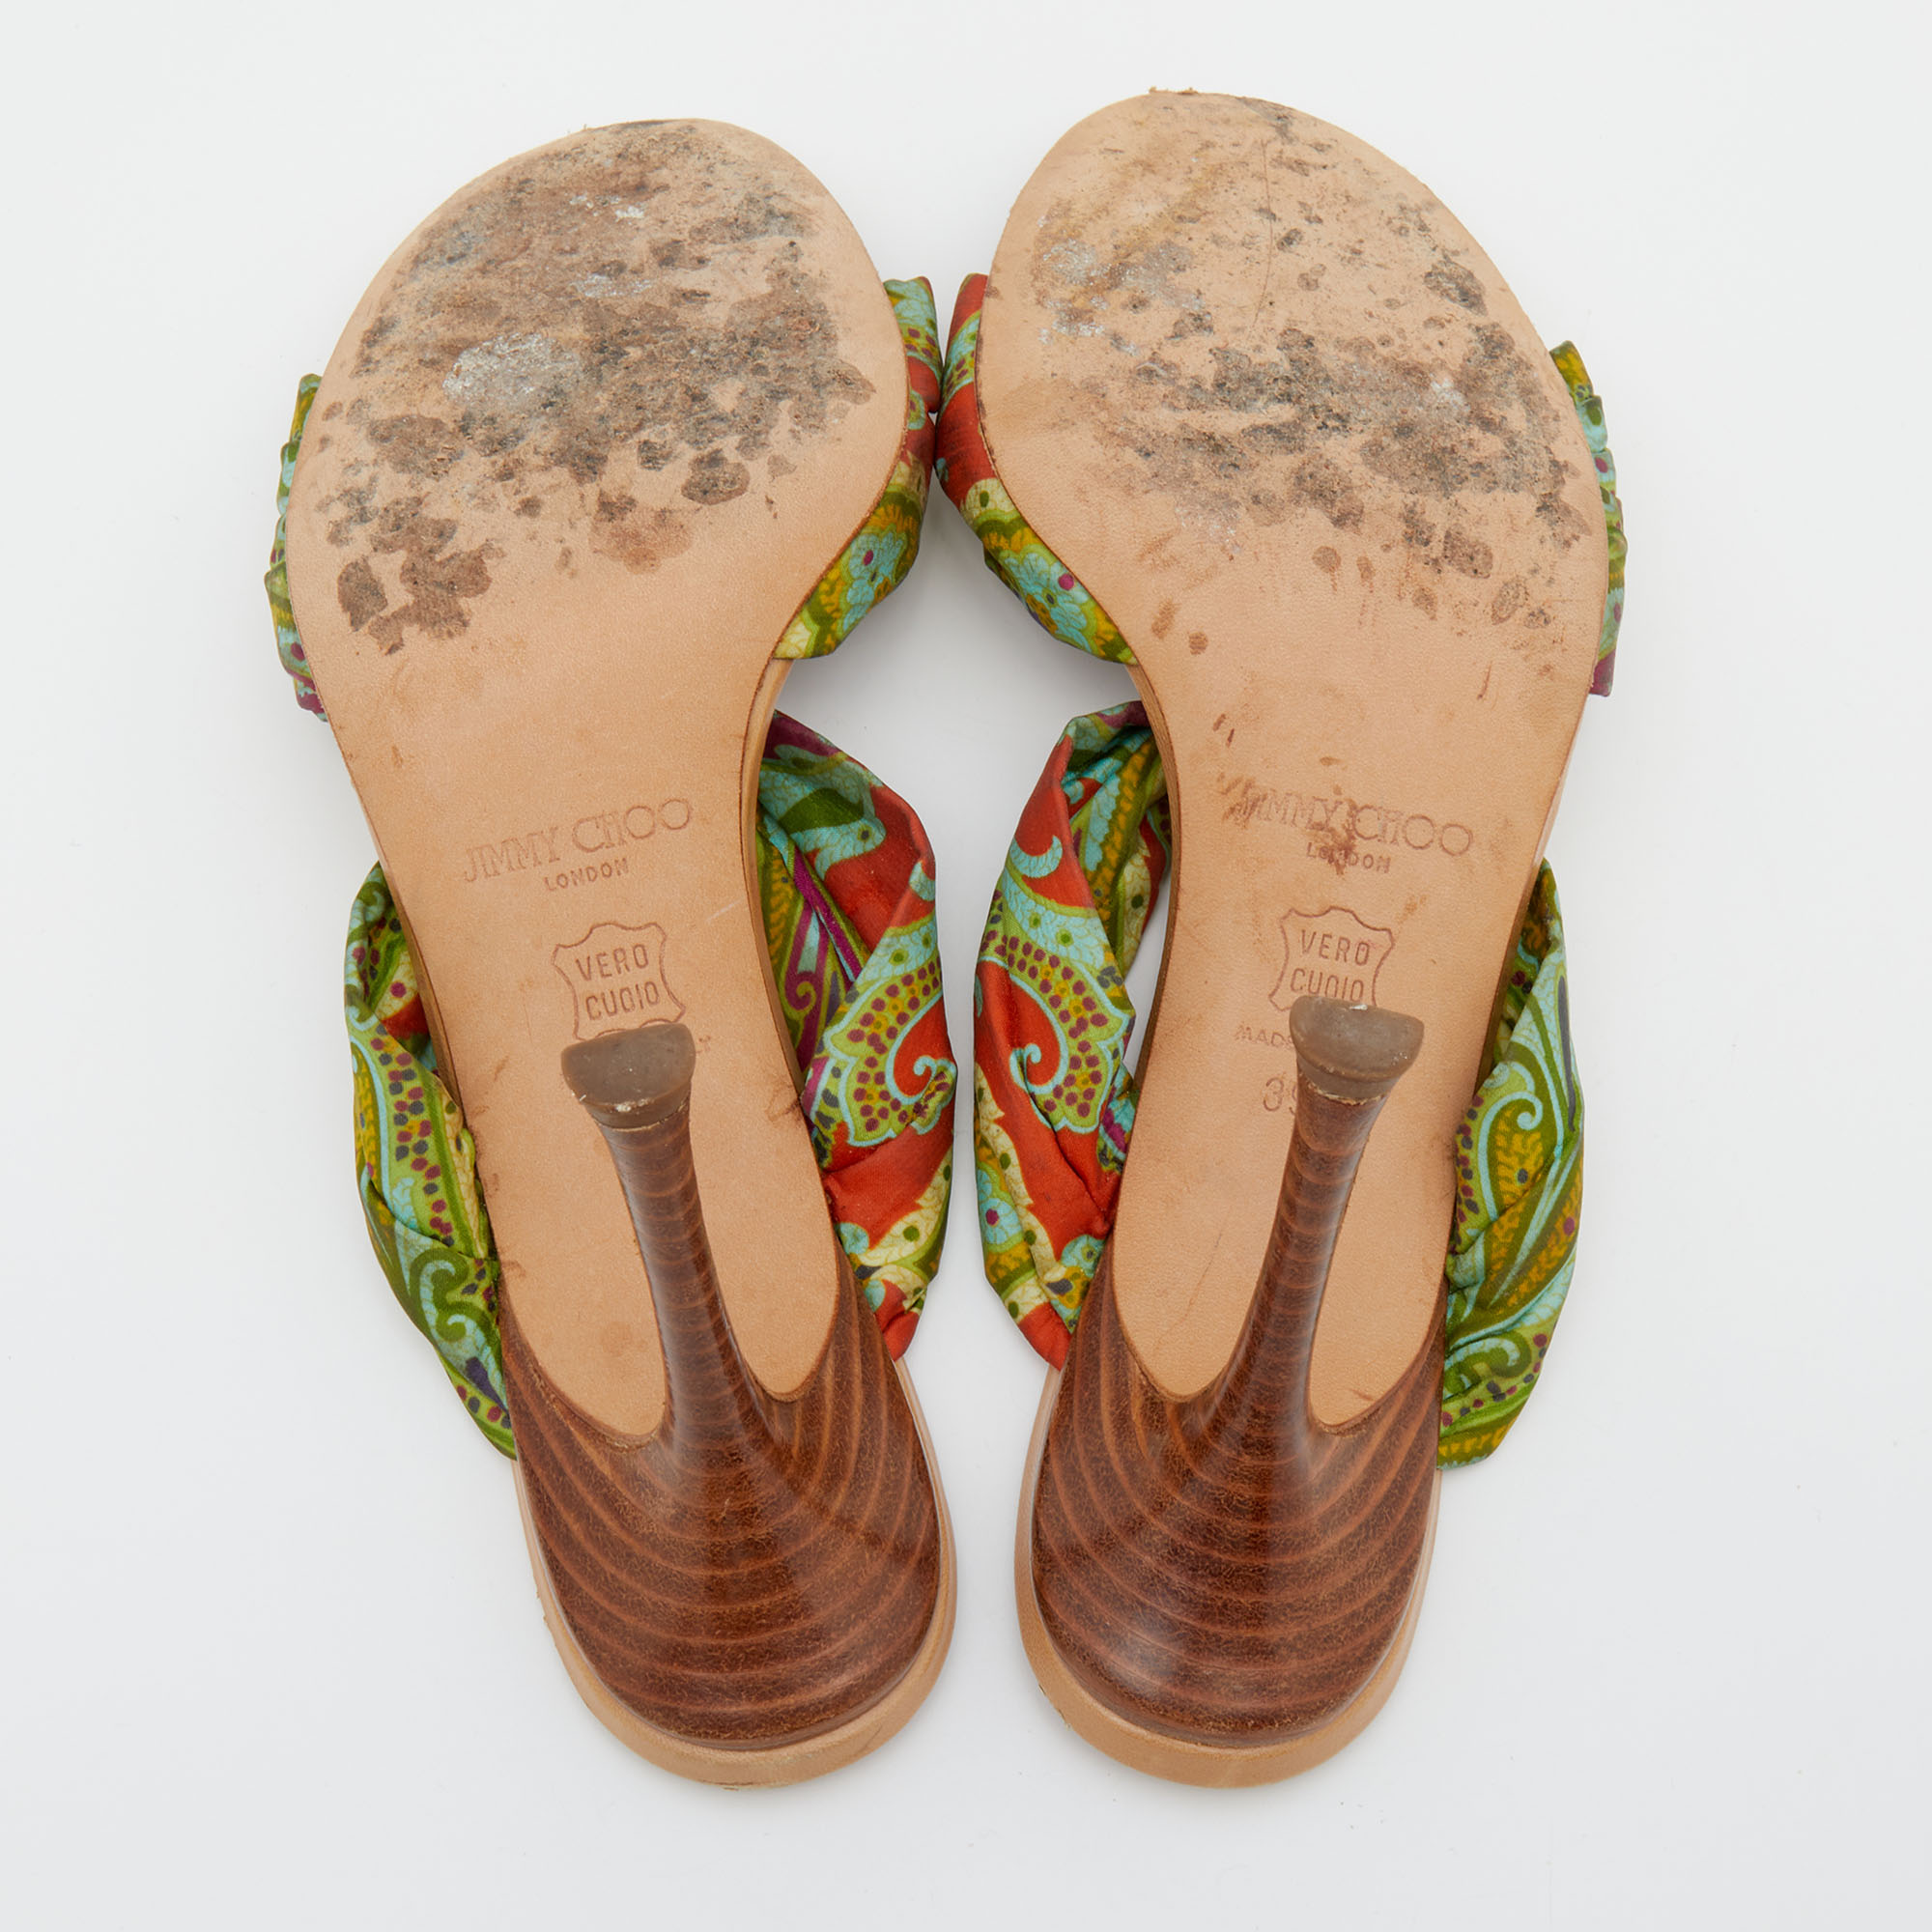 Jimmy Choo Multicolor Floral Print Satin Kris Knot Slide Sandals Size 39.5